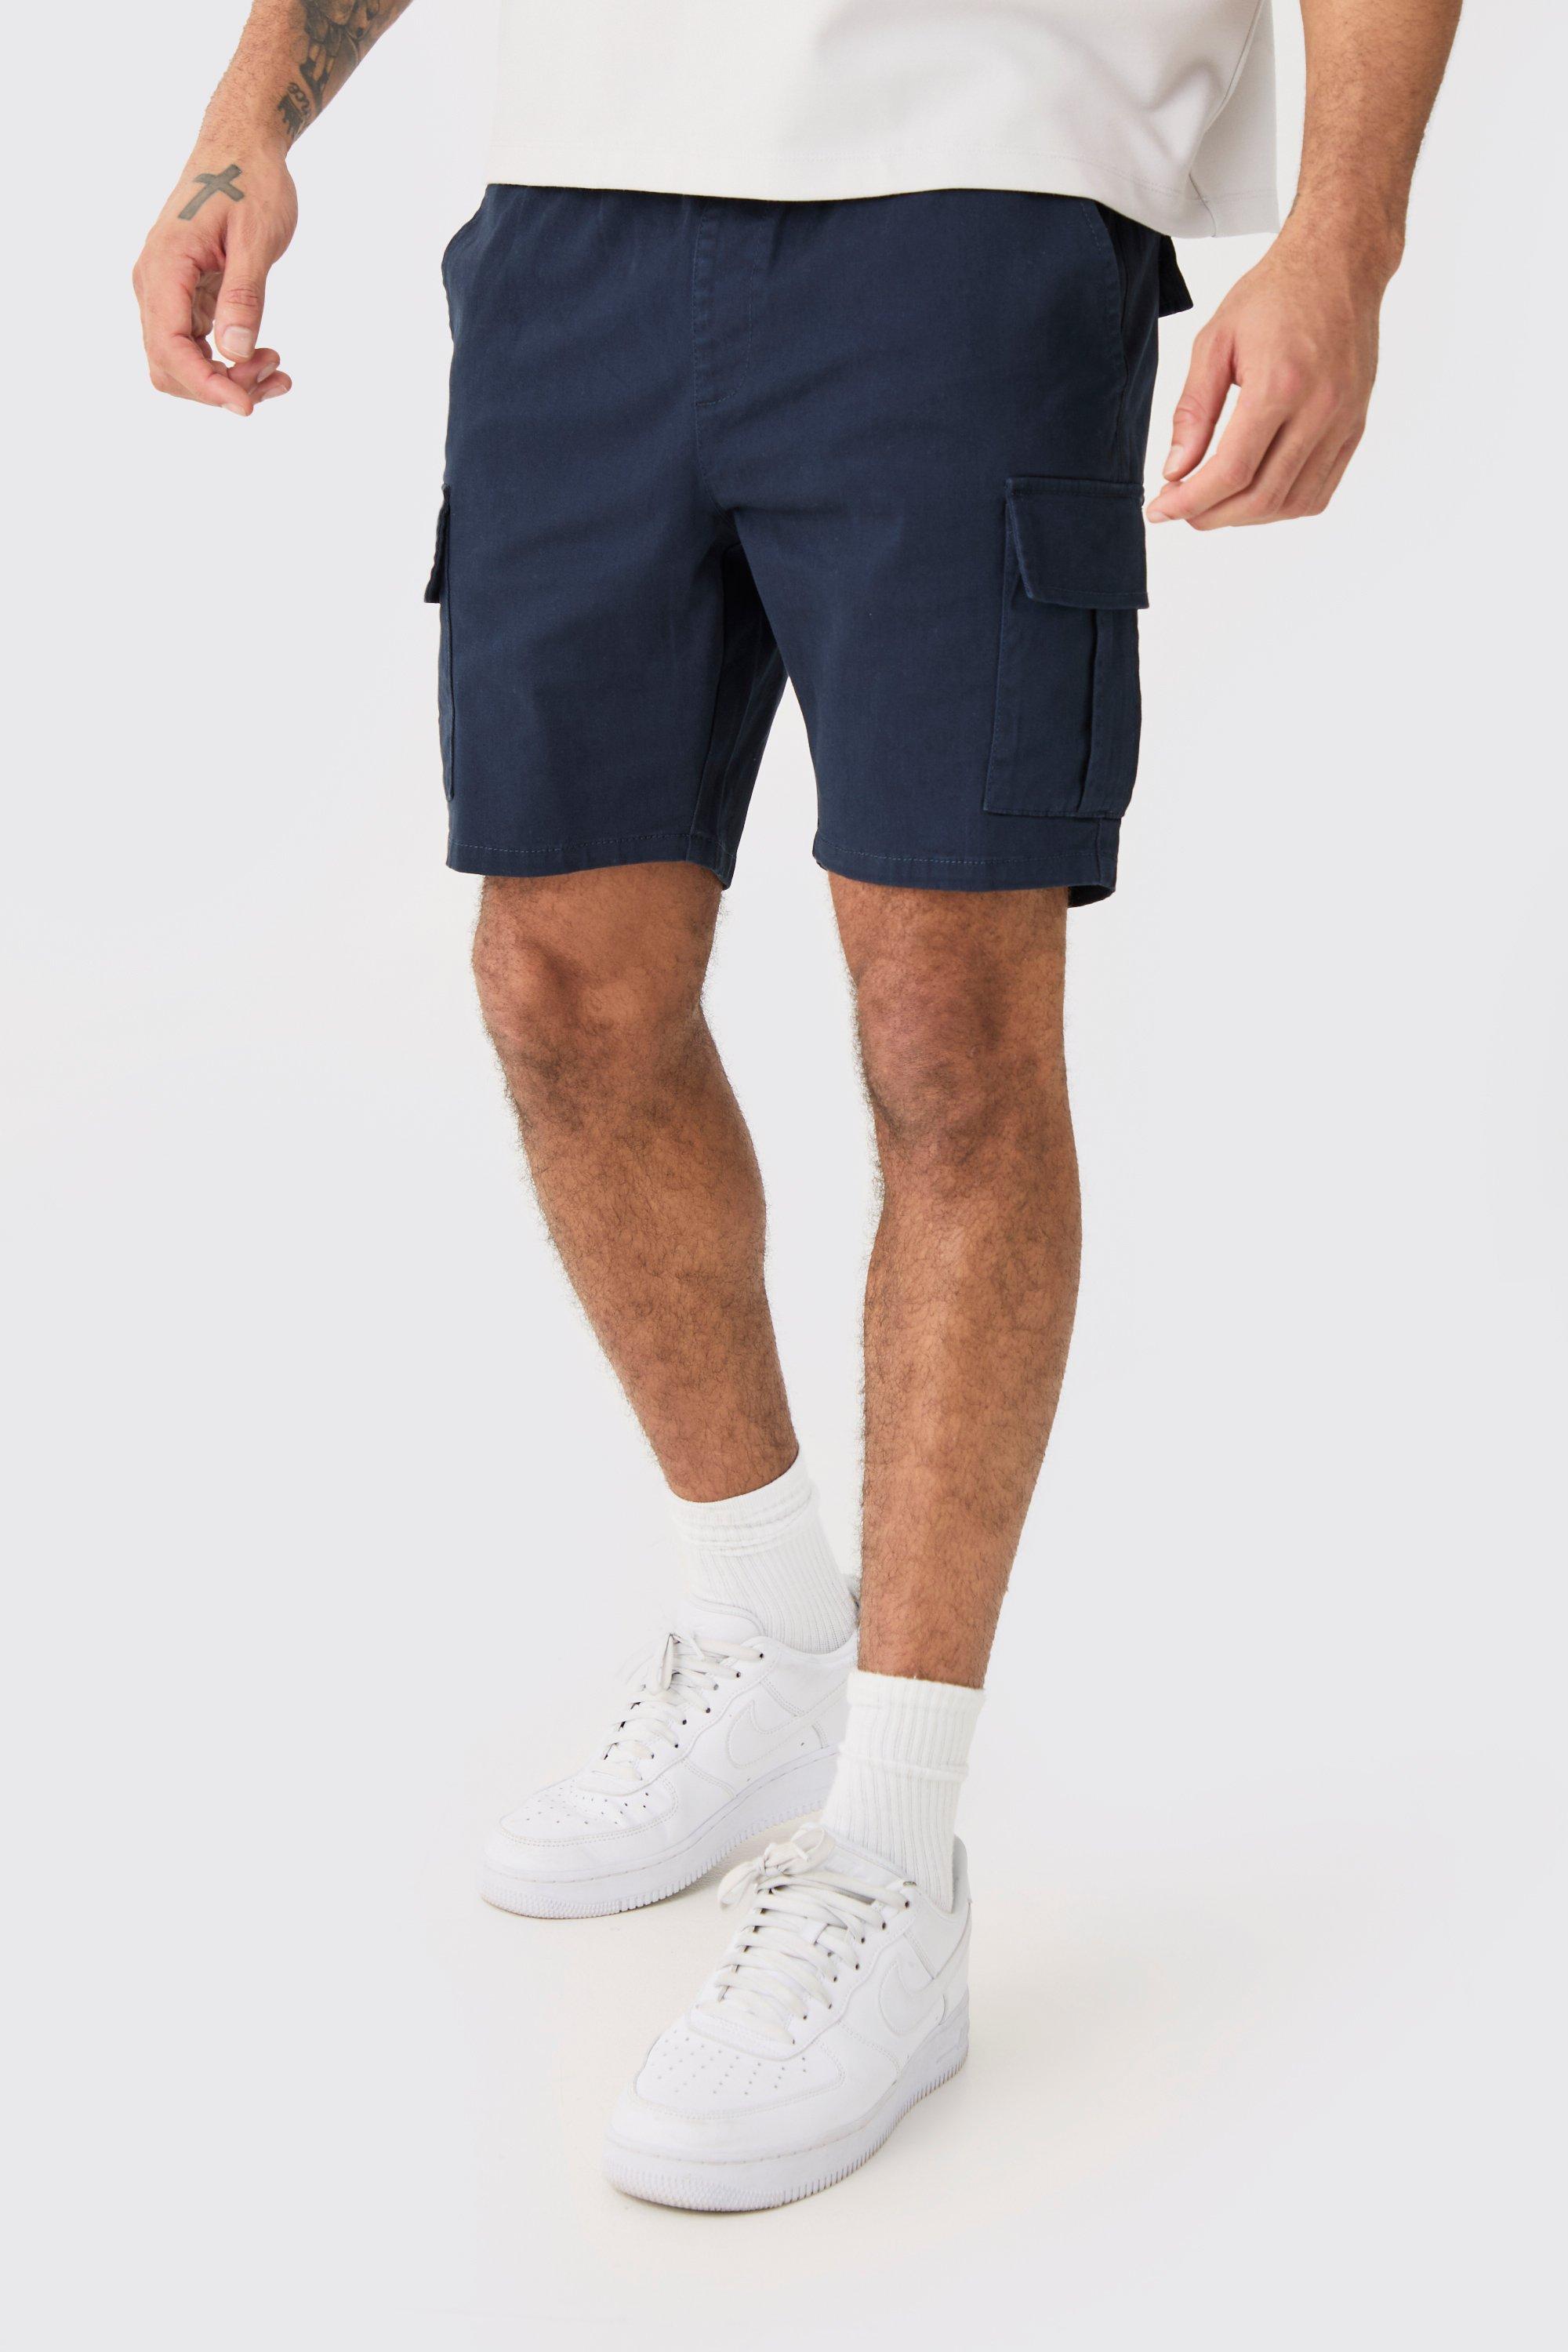 Image of Elastic Waist Navy Skinny Fit Cargo Shorts, Navy